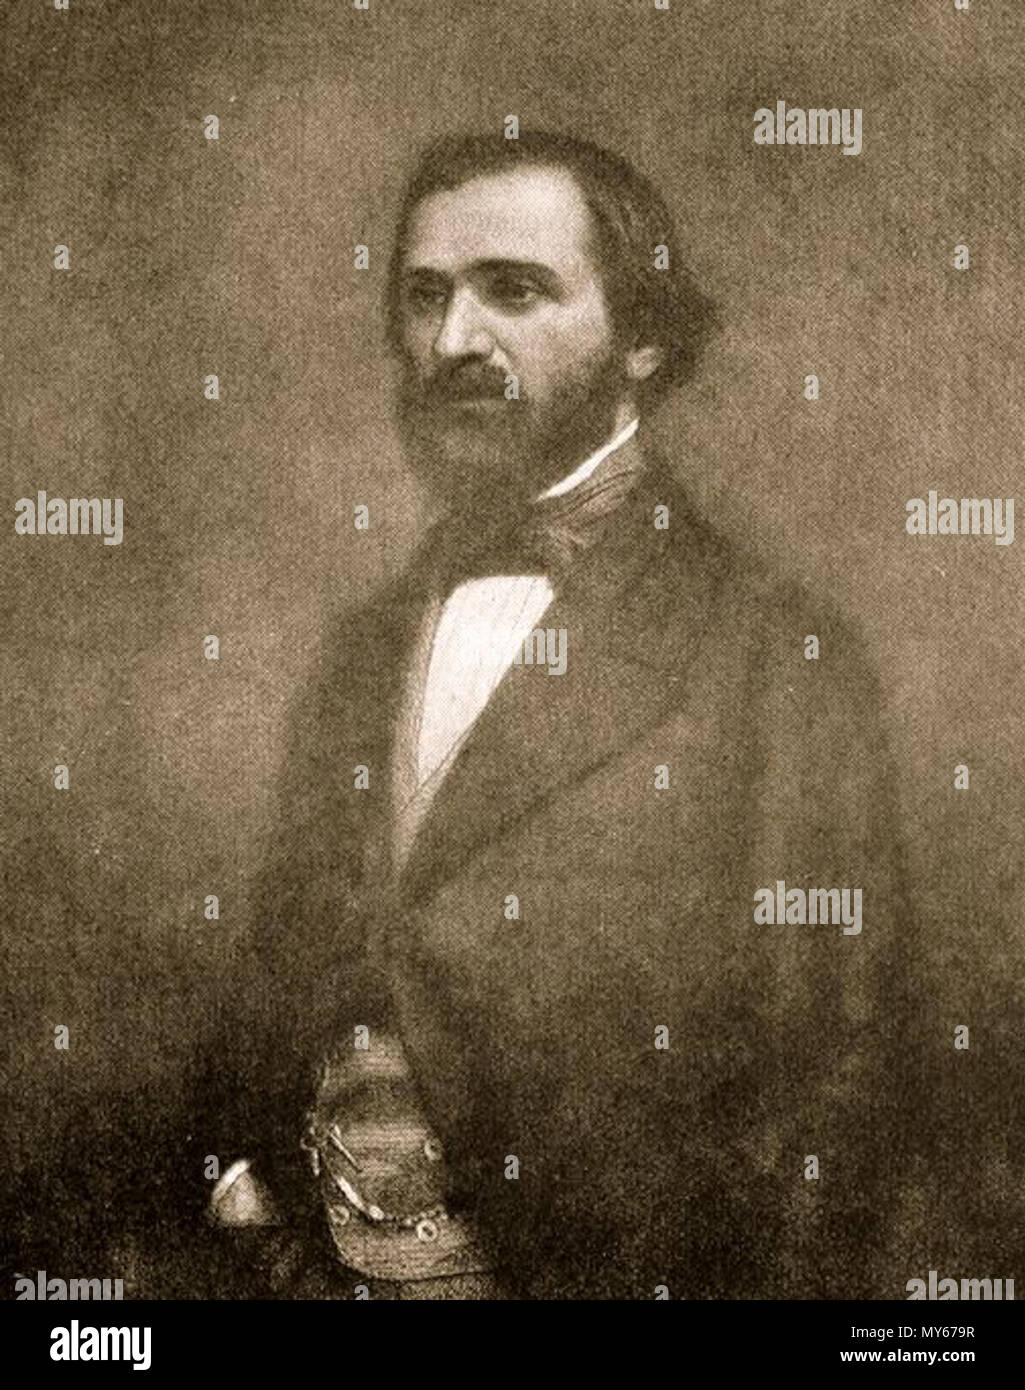 213 Giuseppe Verdi portrait Stock Photo